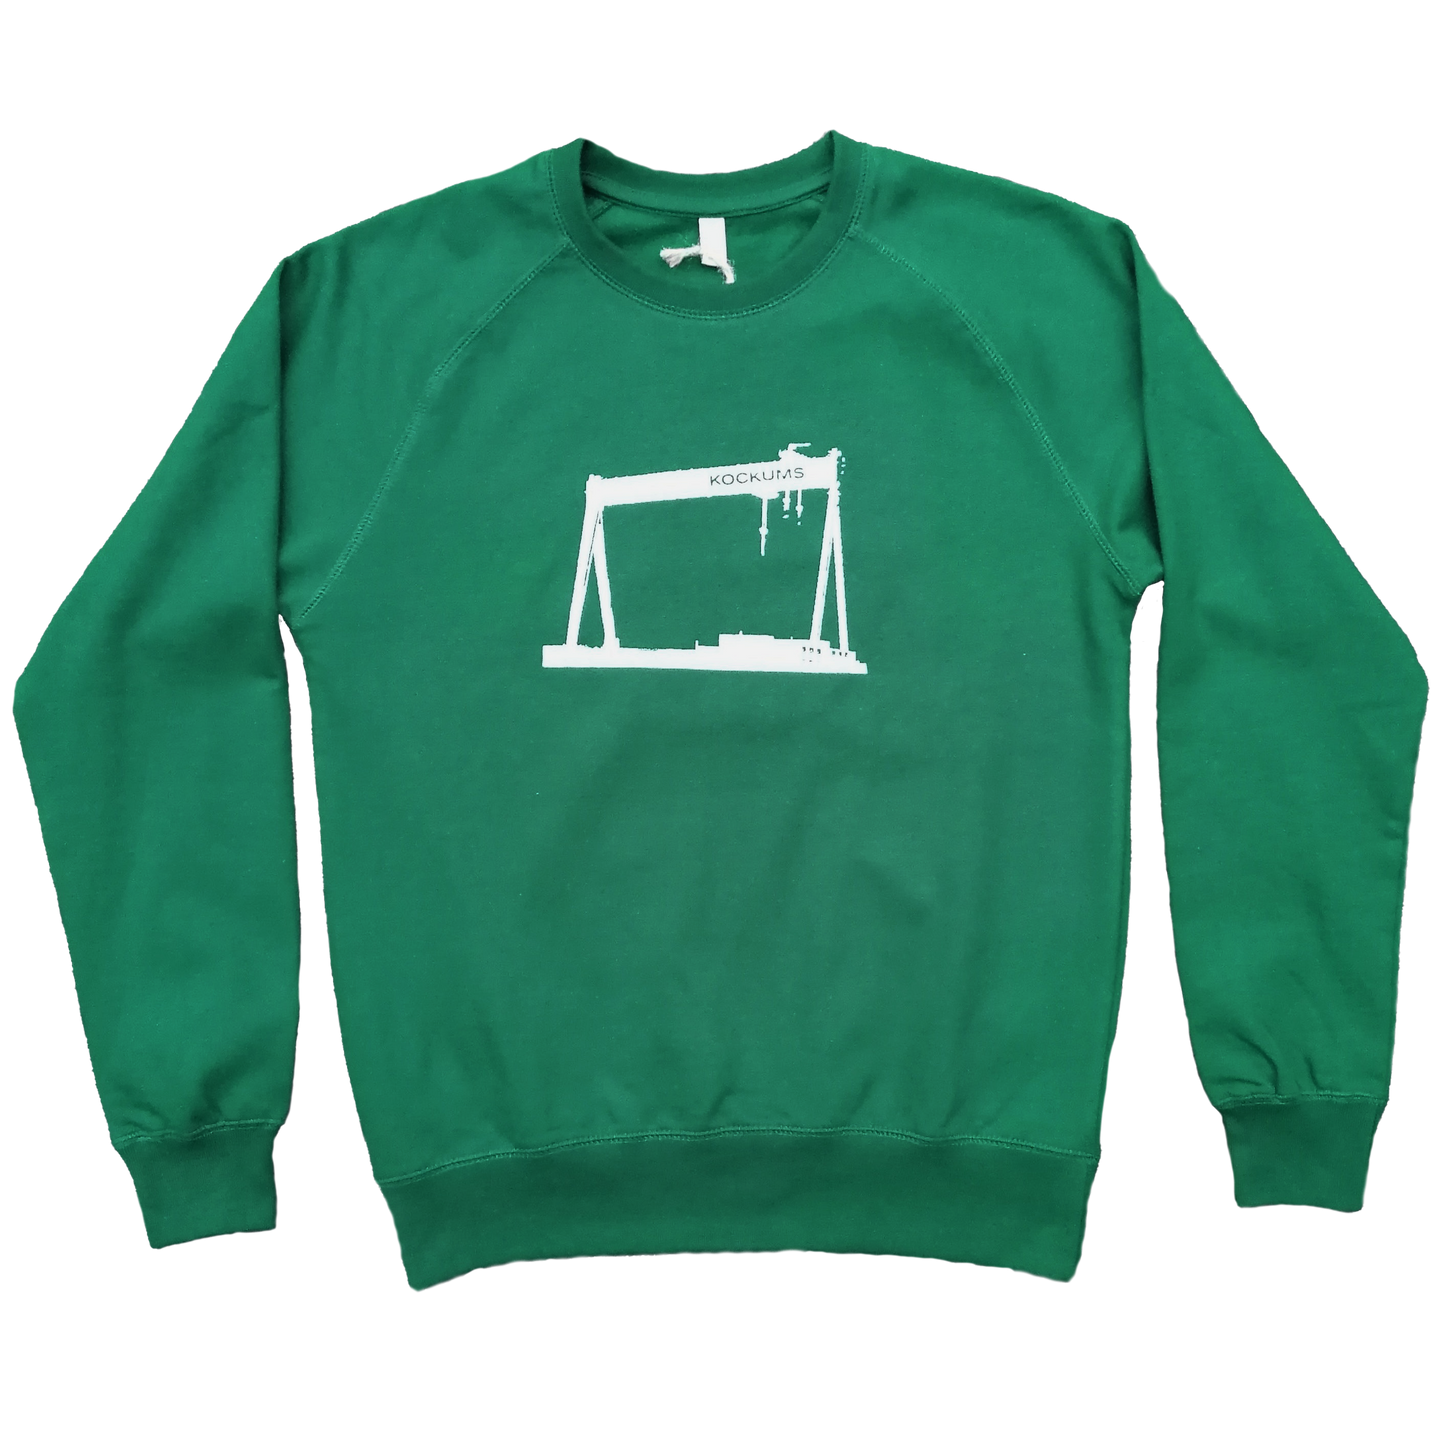 Sweatshirt Kockumskran grön